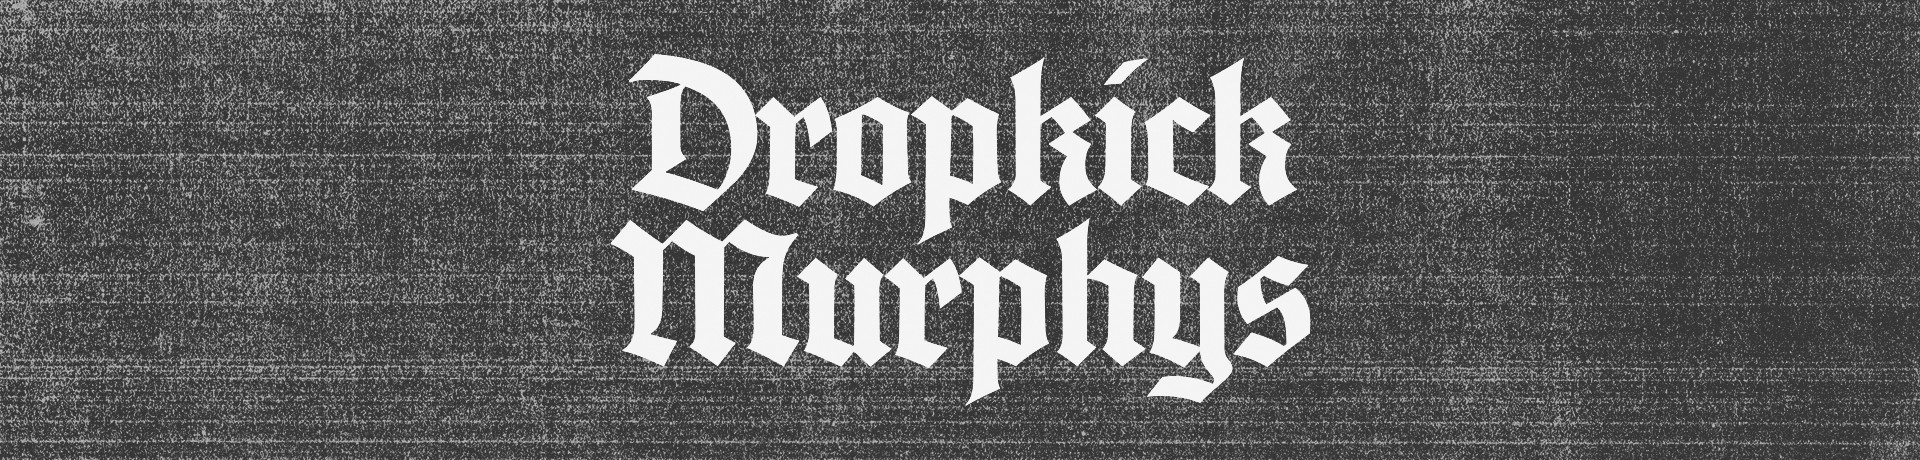 Dropkick Murphys - Ire Shield